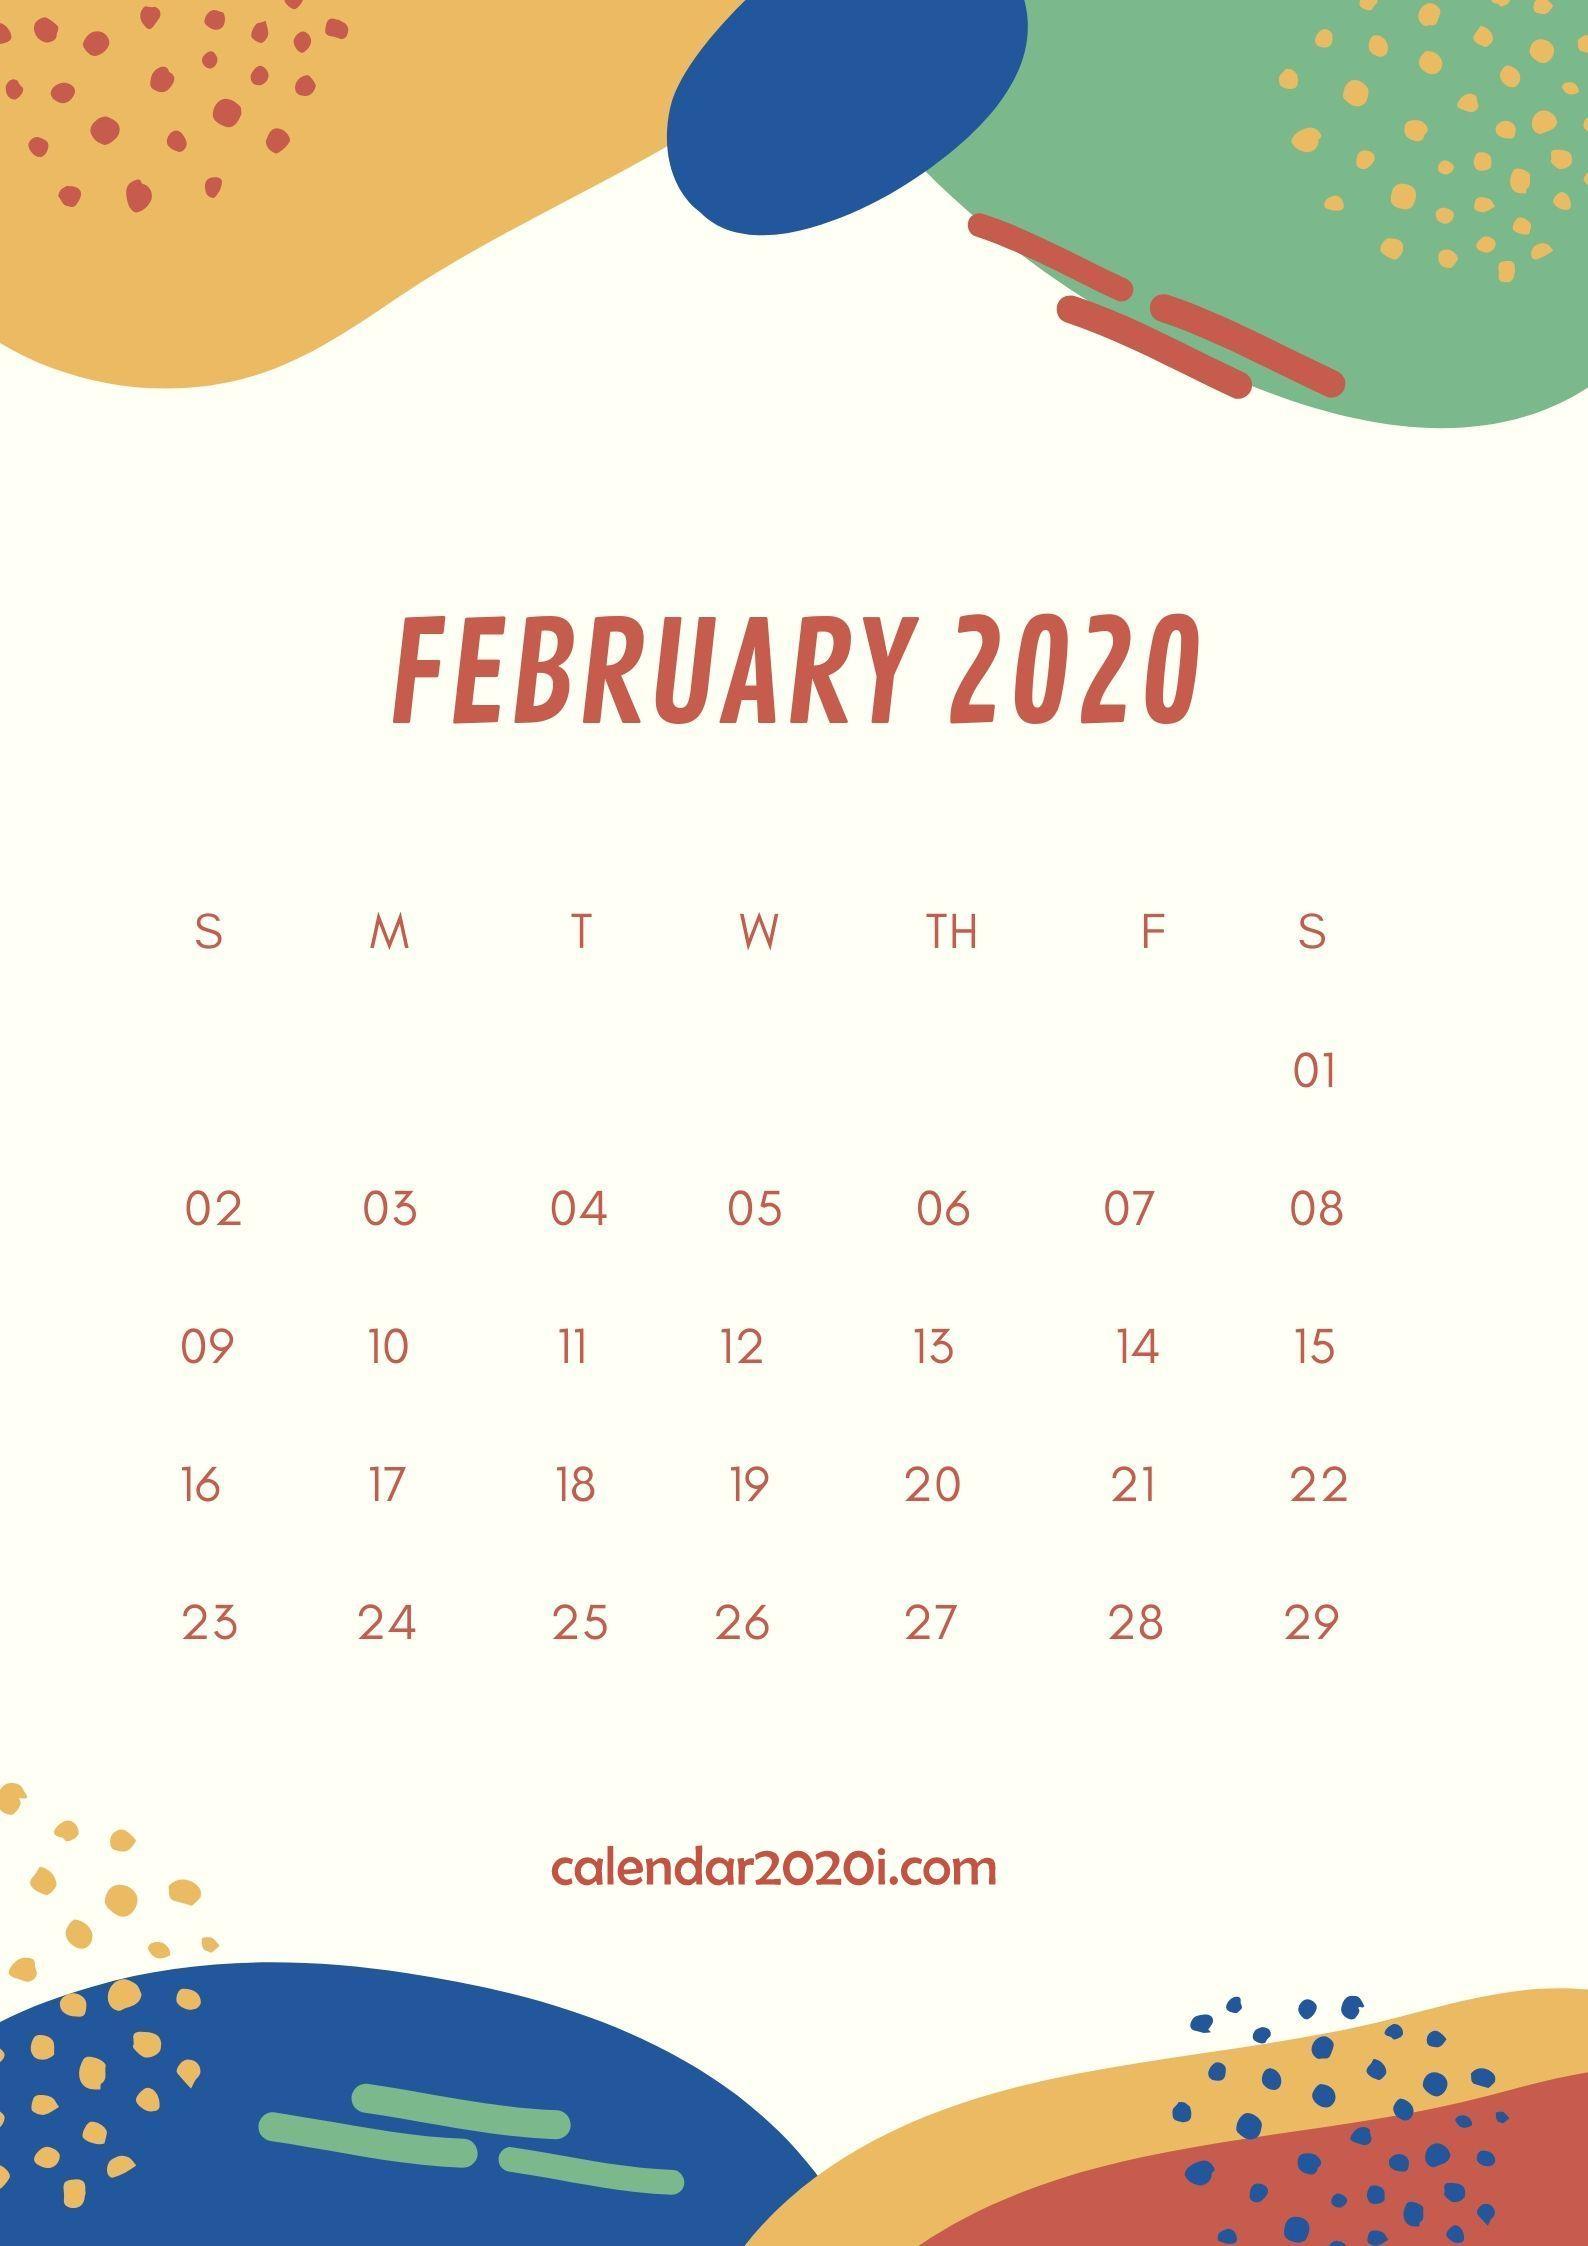 February 2020 Calendar Wallpaper Free February 2020